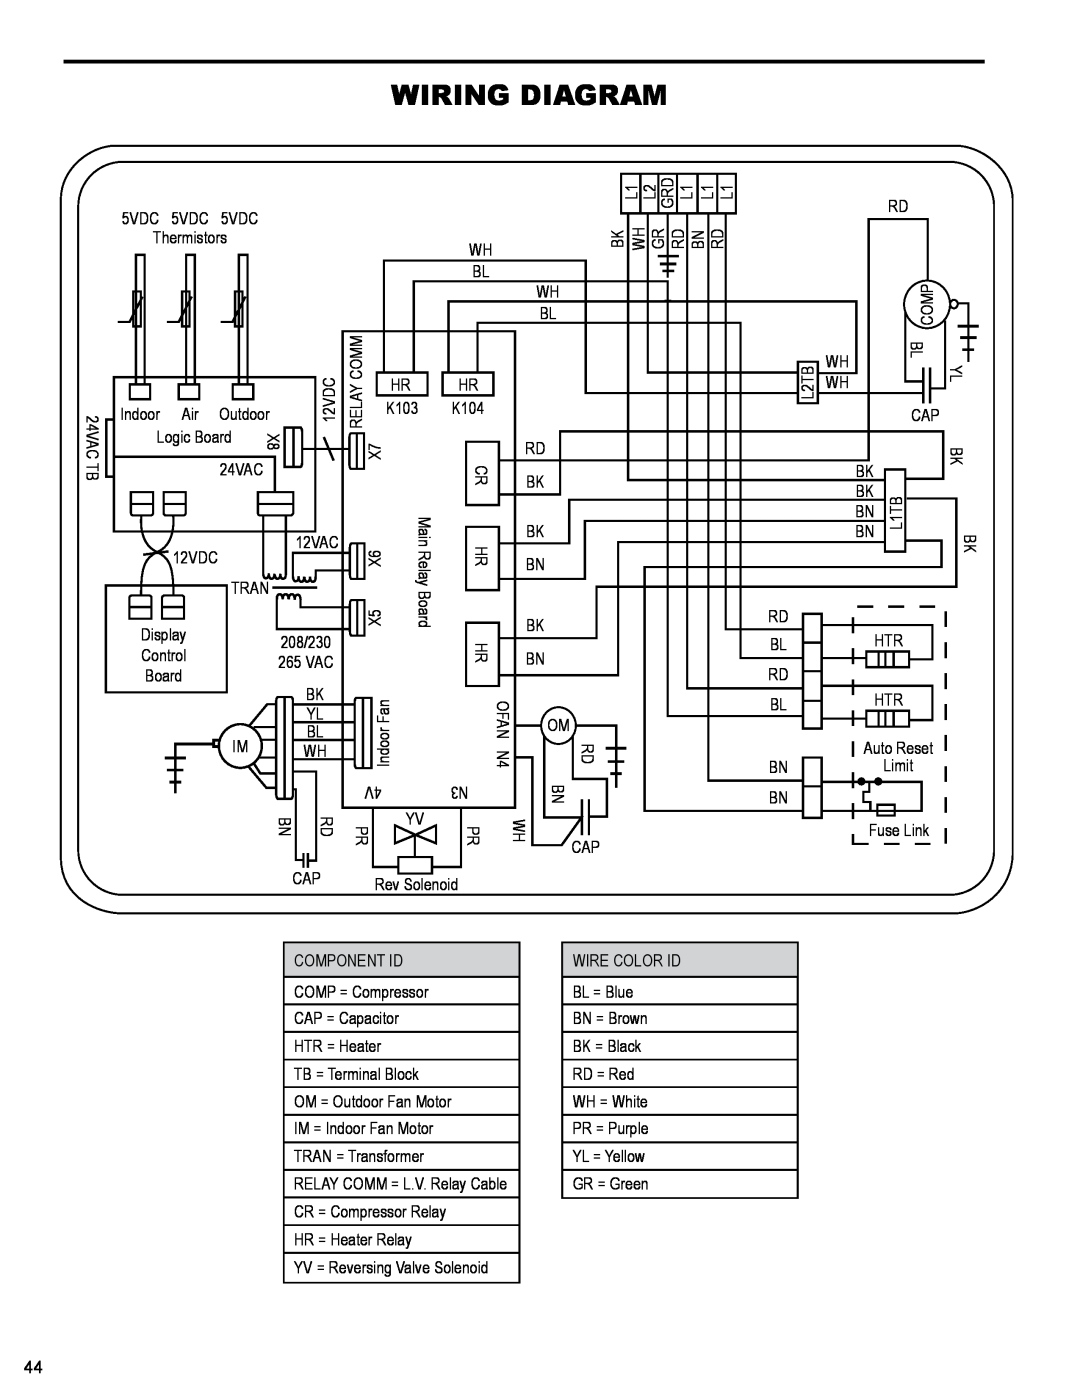 Friedrich PTAC - R410A service manual Wiring Diagram 